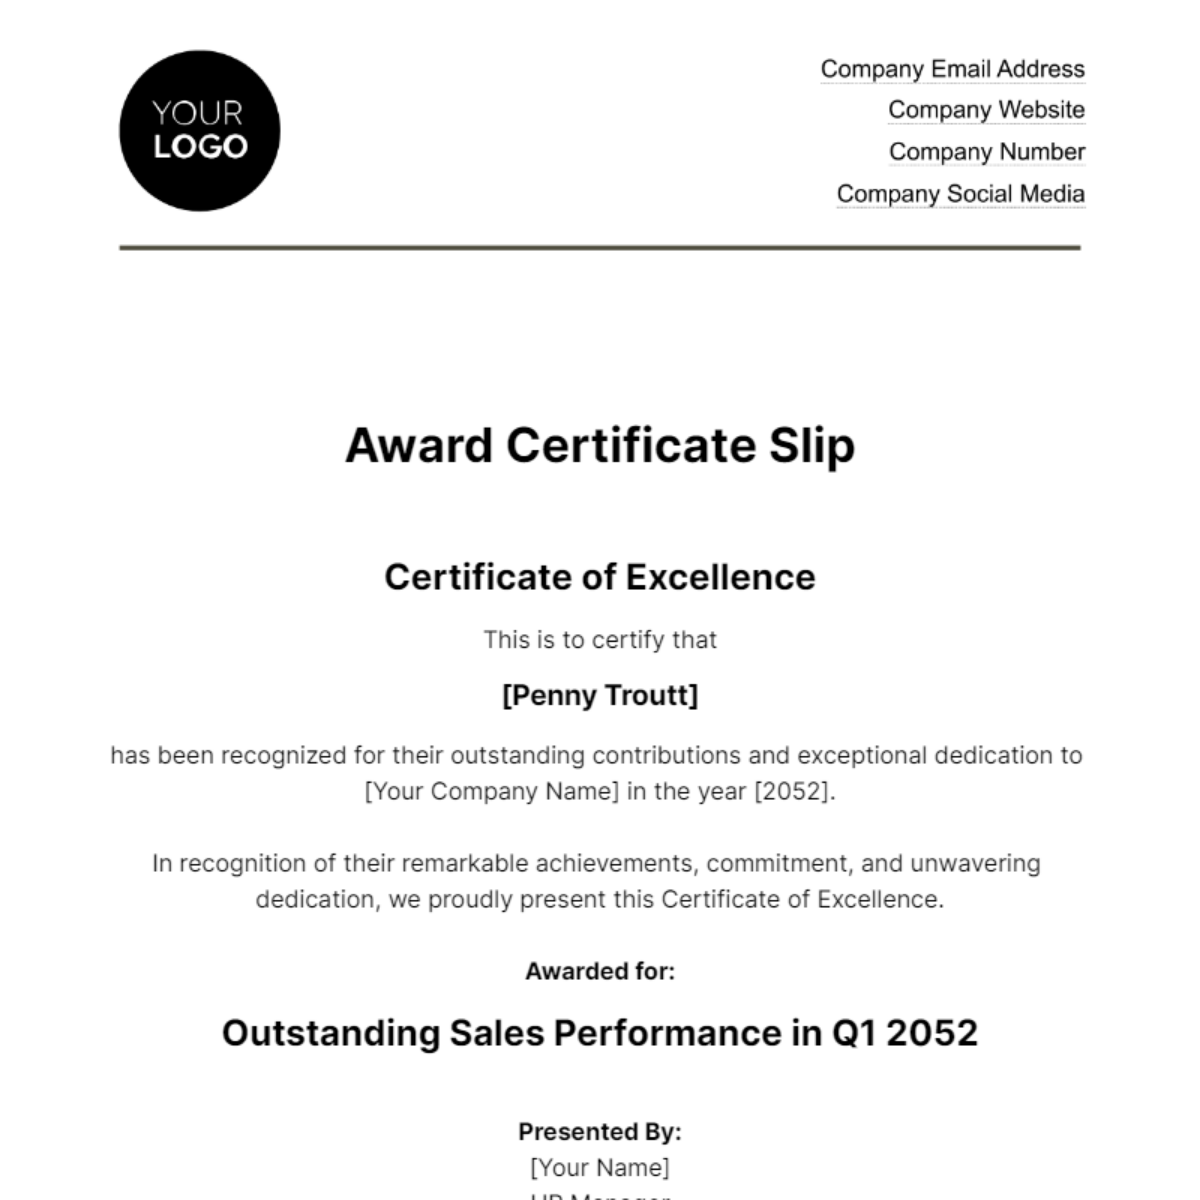 Award Certificate Slip HR Template